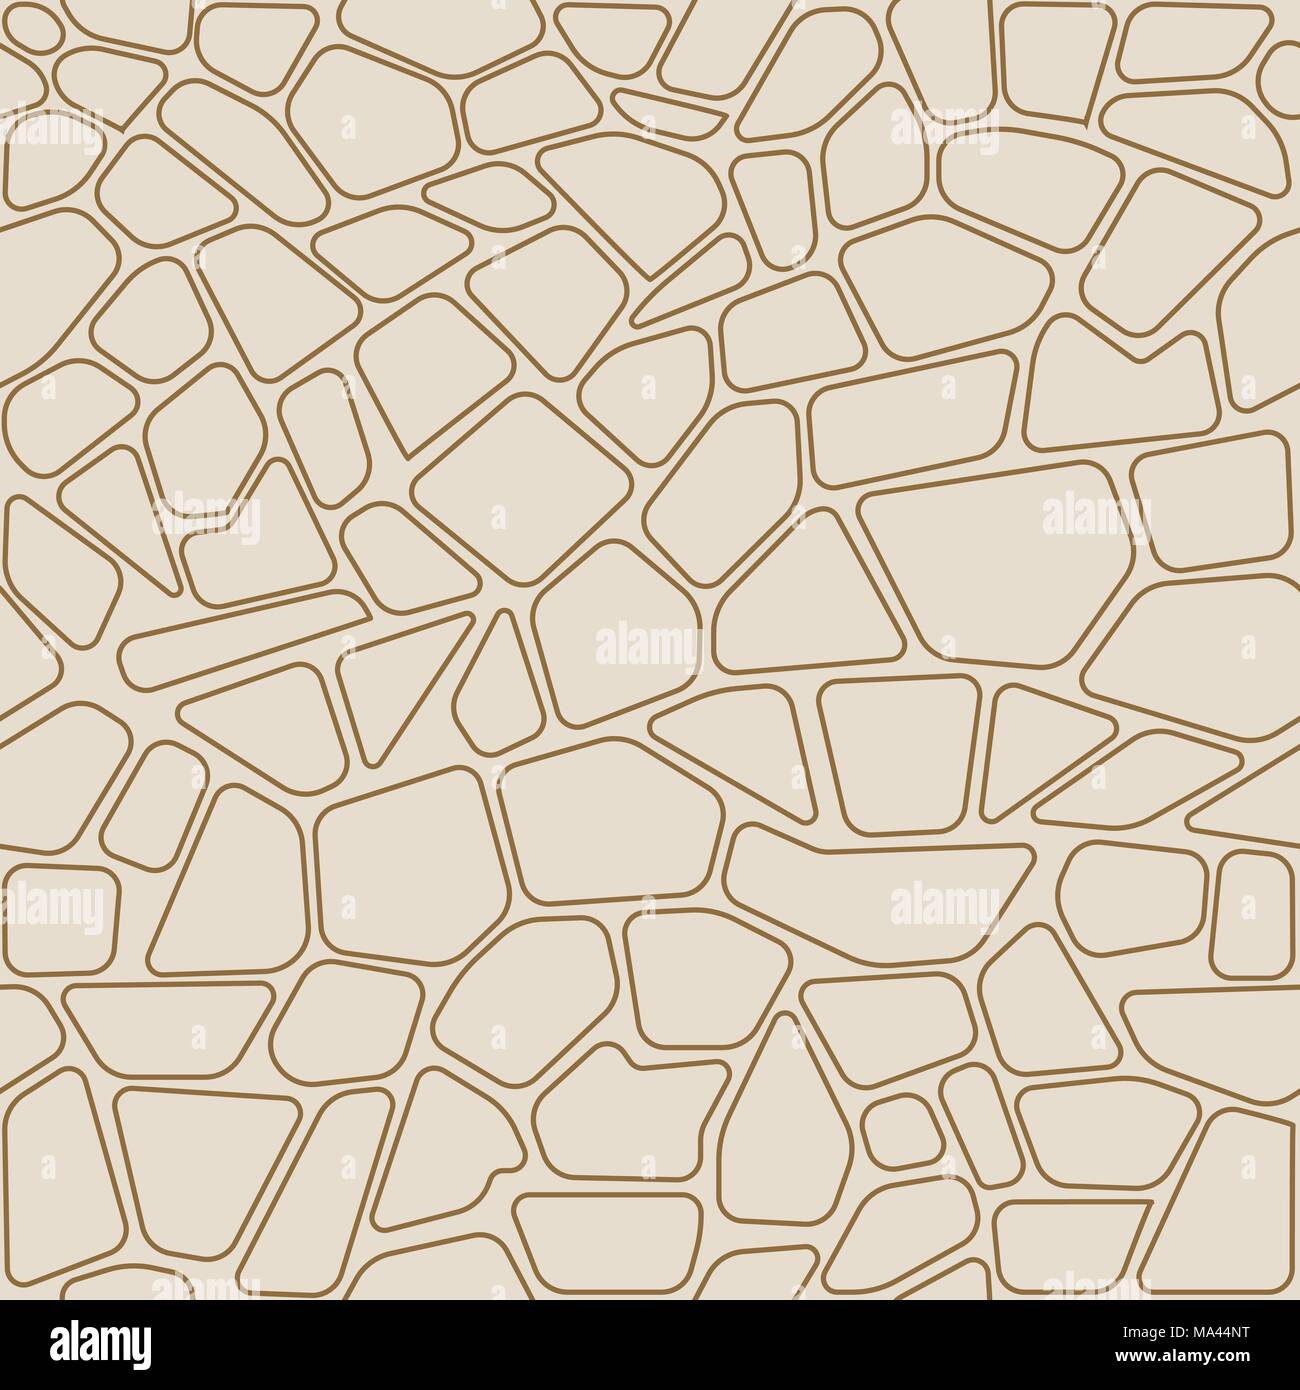 stone seamless pattern Stock Vector